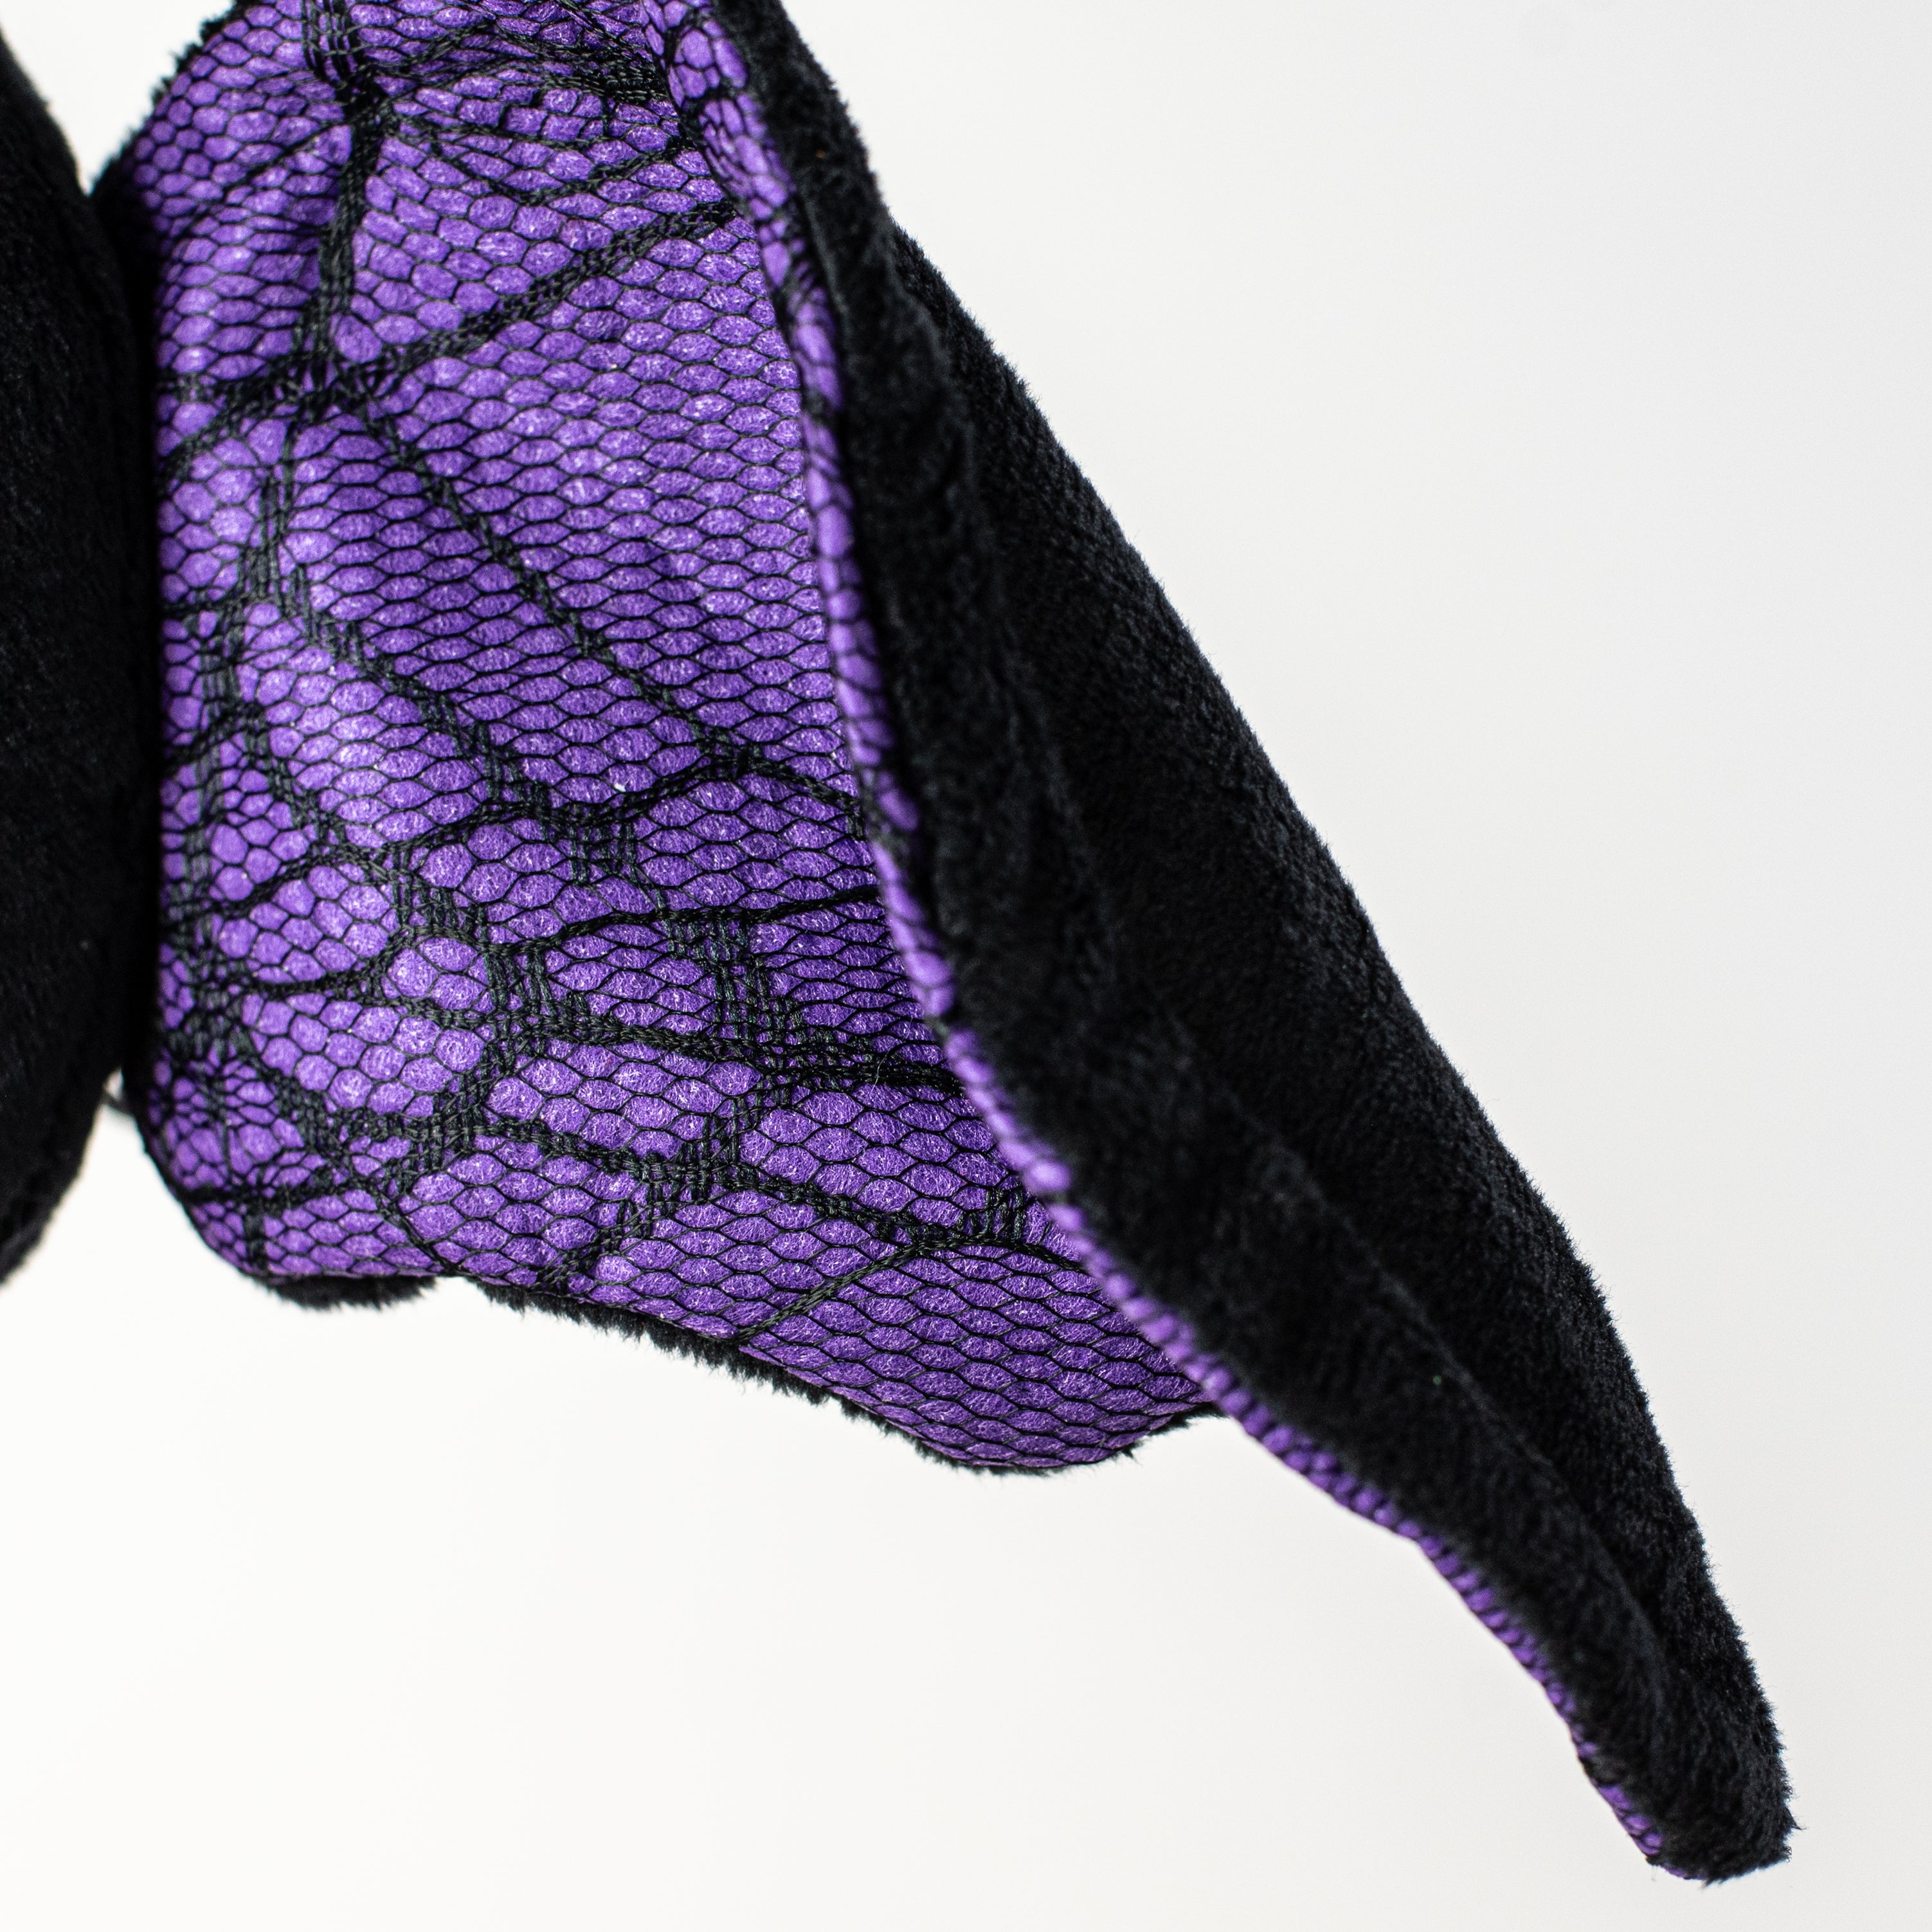 16" Plush Lace Wing Bat: Black & Purple